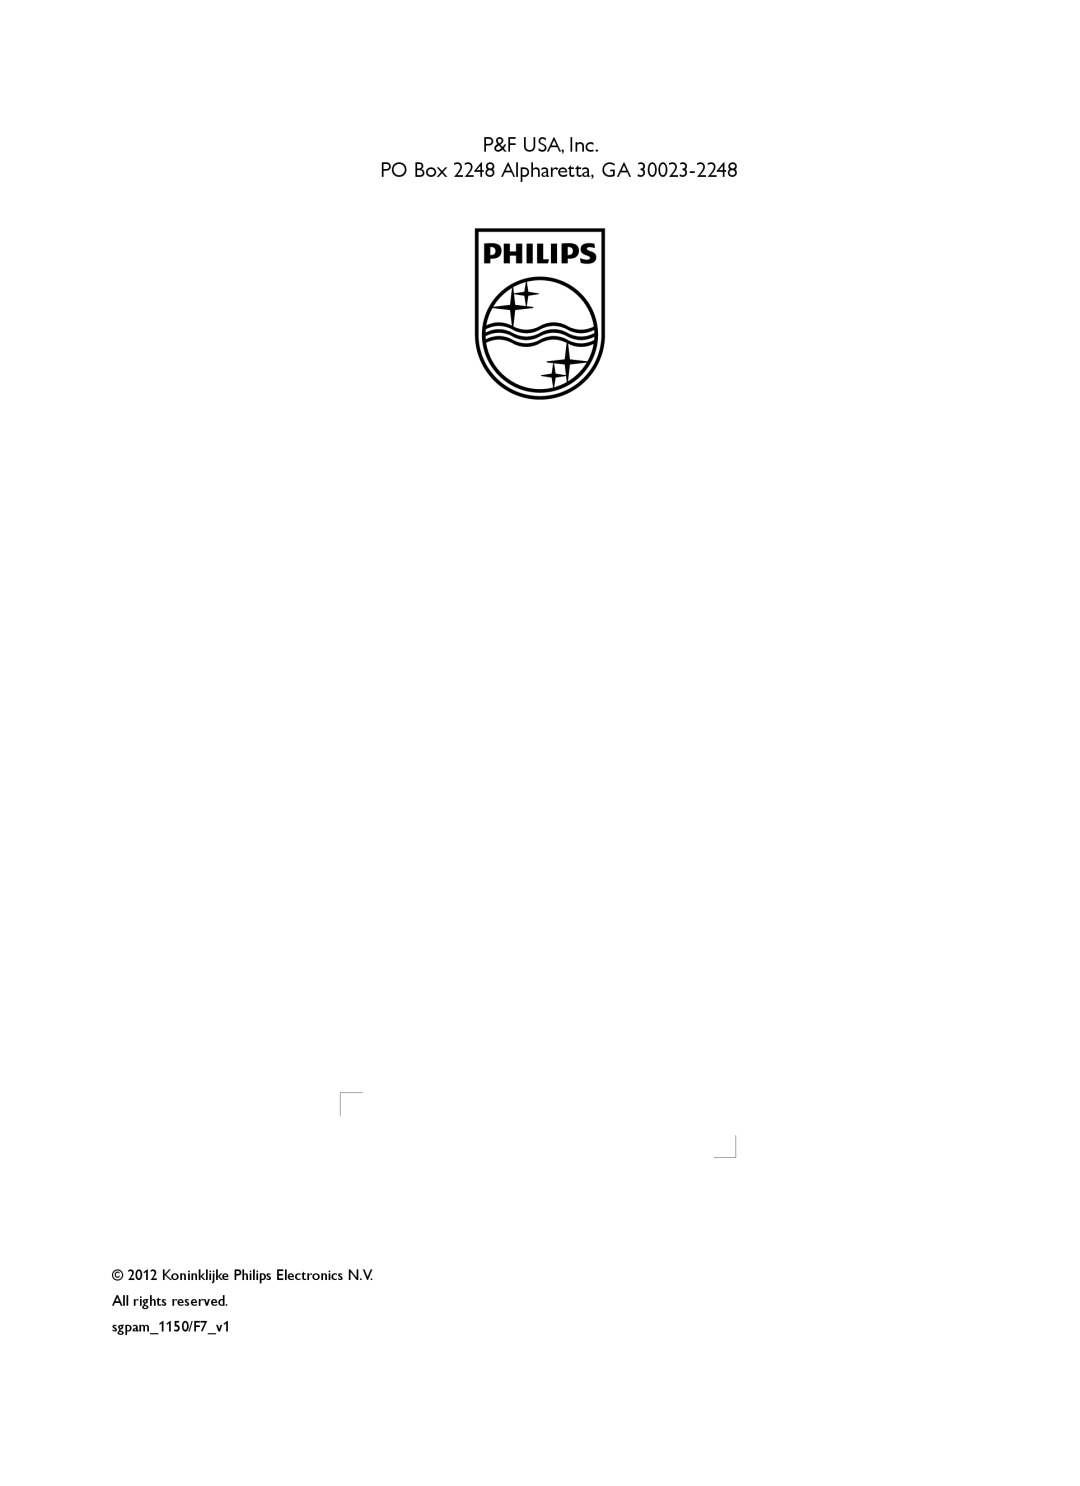 Philips CSS2123/F7 user manual P&F USA, Inc PO Box 2248 Alpharetta, GA 